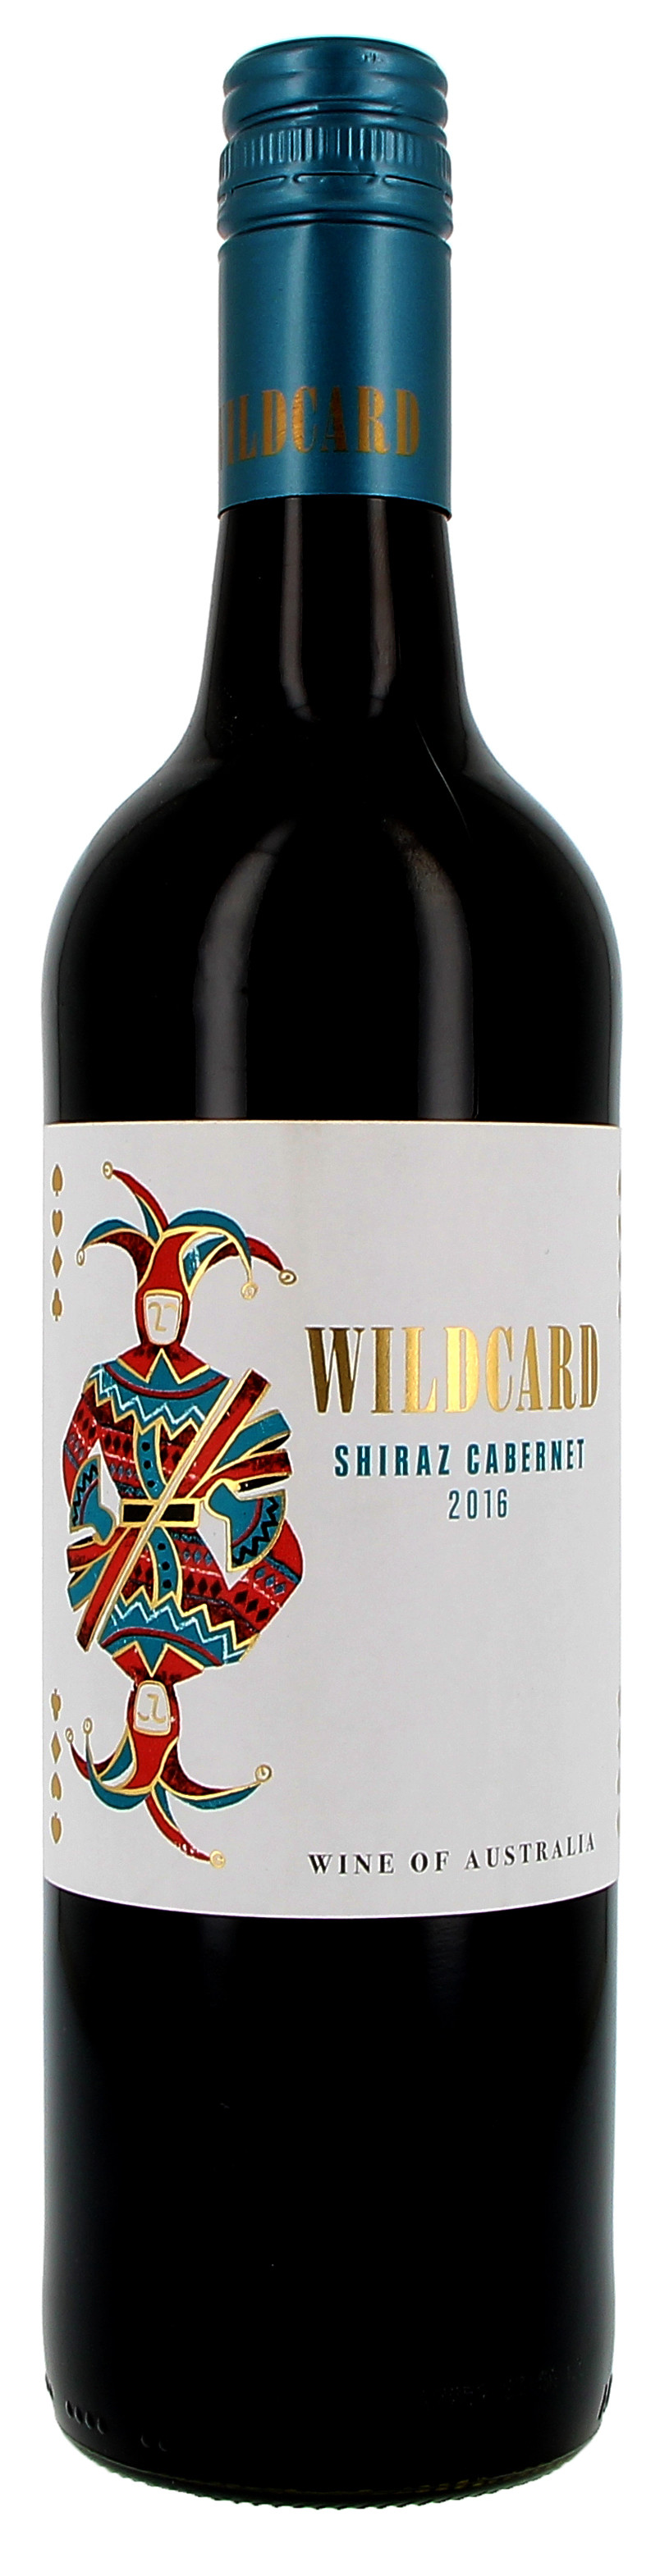 Wildcard Shiraz Cabernet 75cl Peter Lehmann Wines Australie (Wijnen)